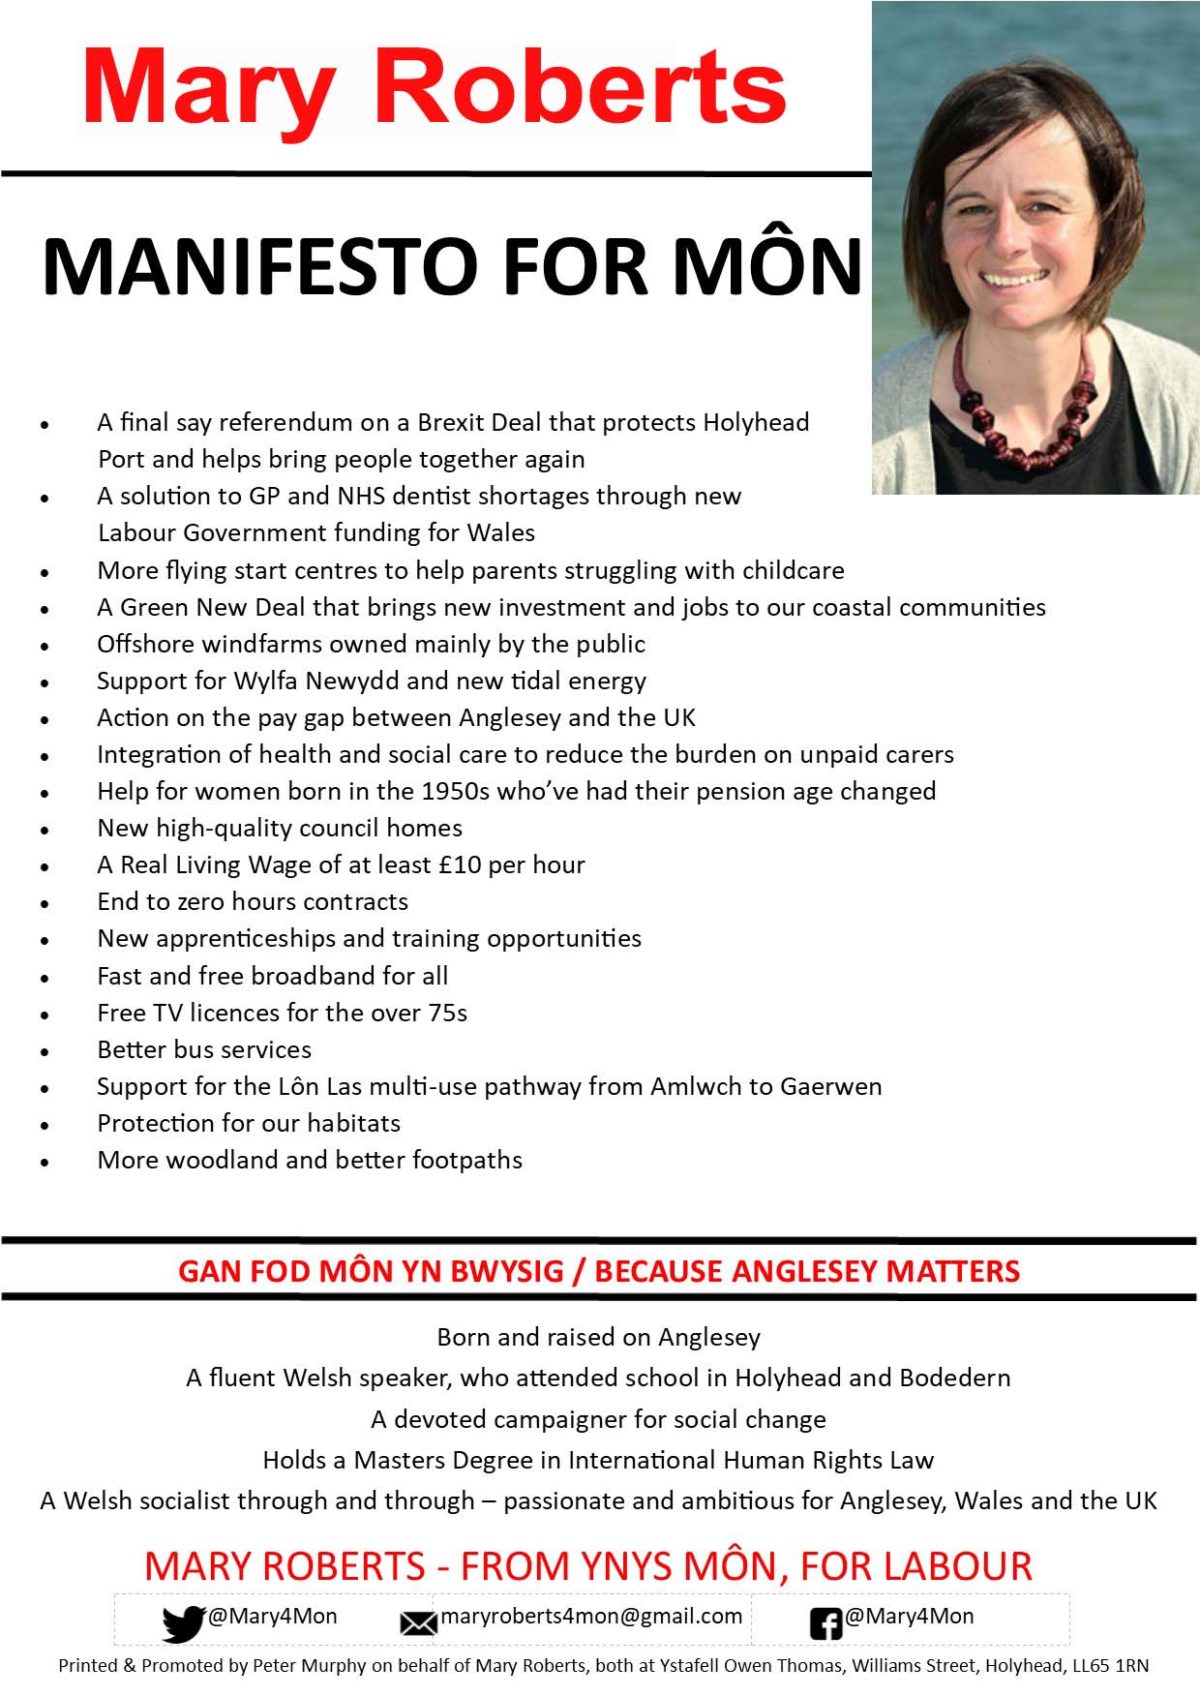 Mary Roberts: Manifesto for Môn